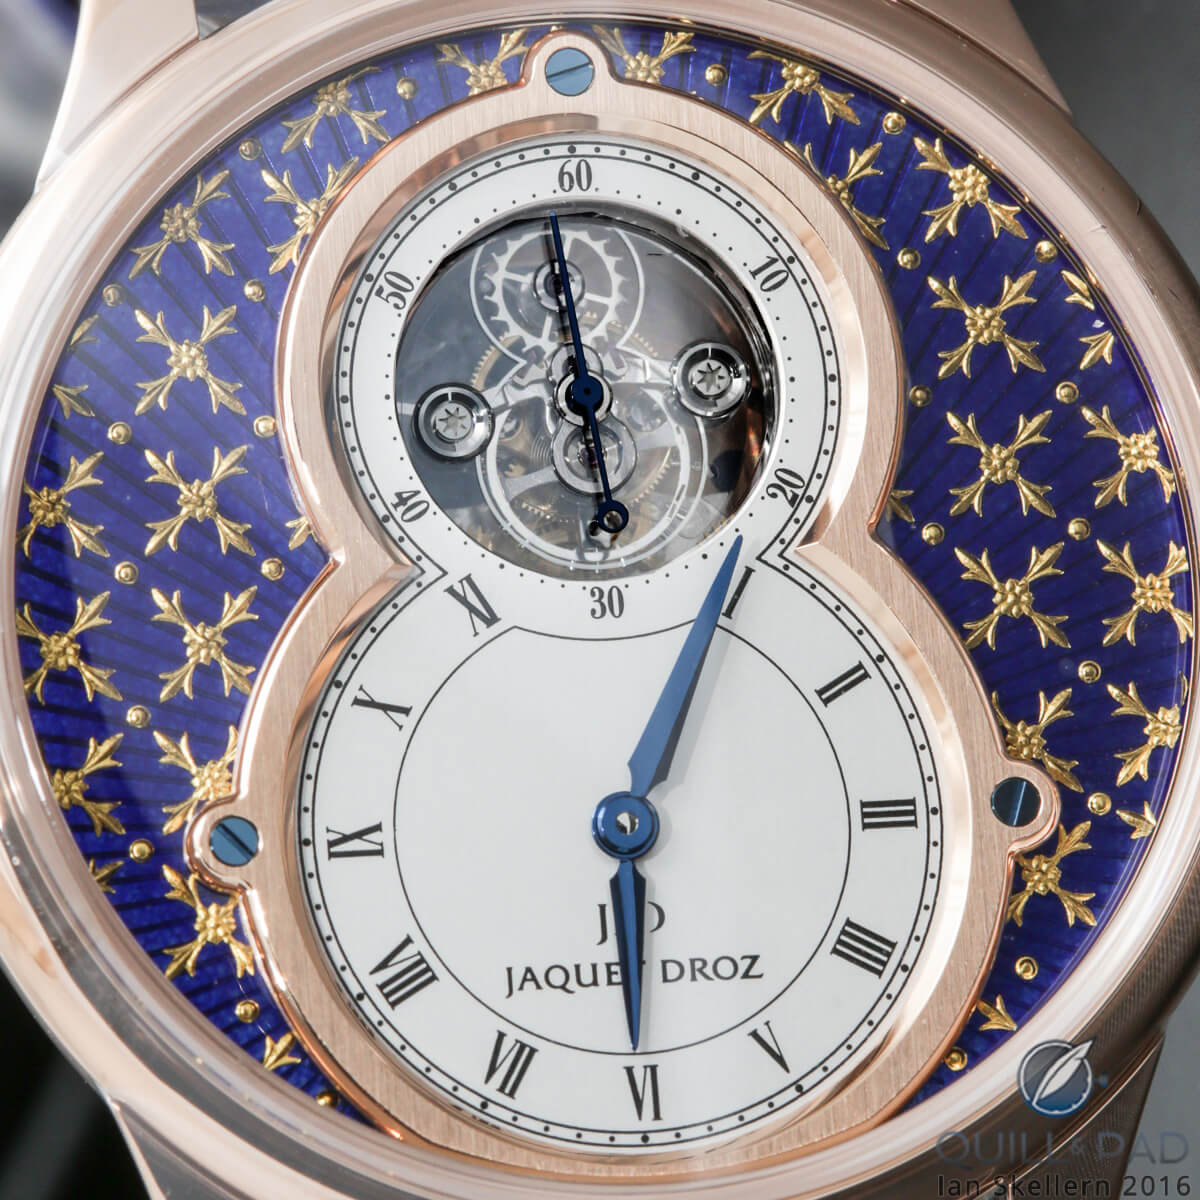 Close up look at the dial of the Jaquet Droz Petite Hour Minute Tourbillon Paillonnée